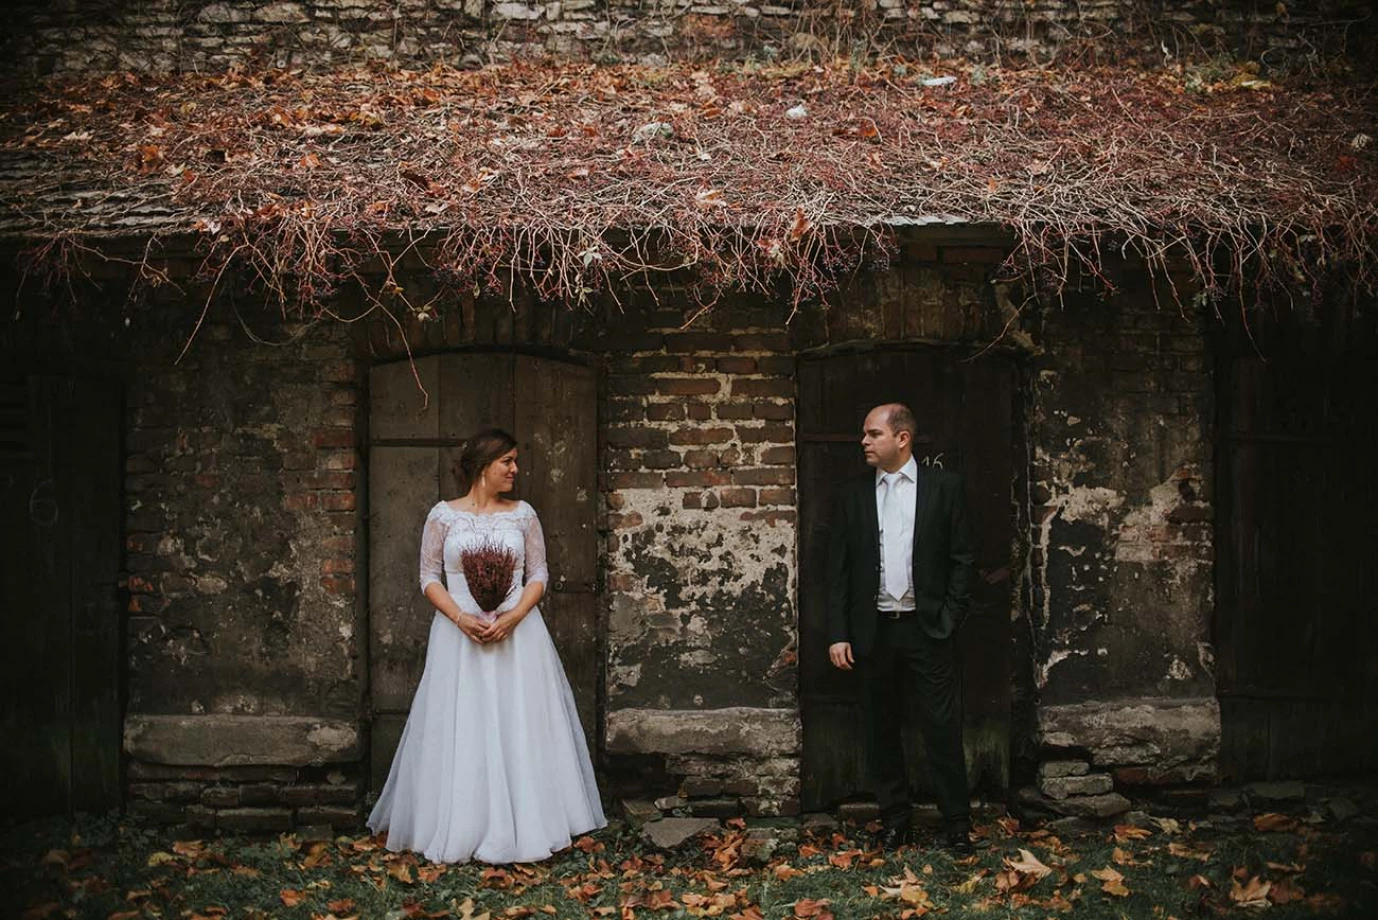 zdjęcia krakow fotograf fotograf-marcin portfolio zdjecia slubne inspiracje wesele plener slubny sesja slubna